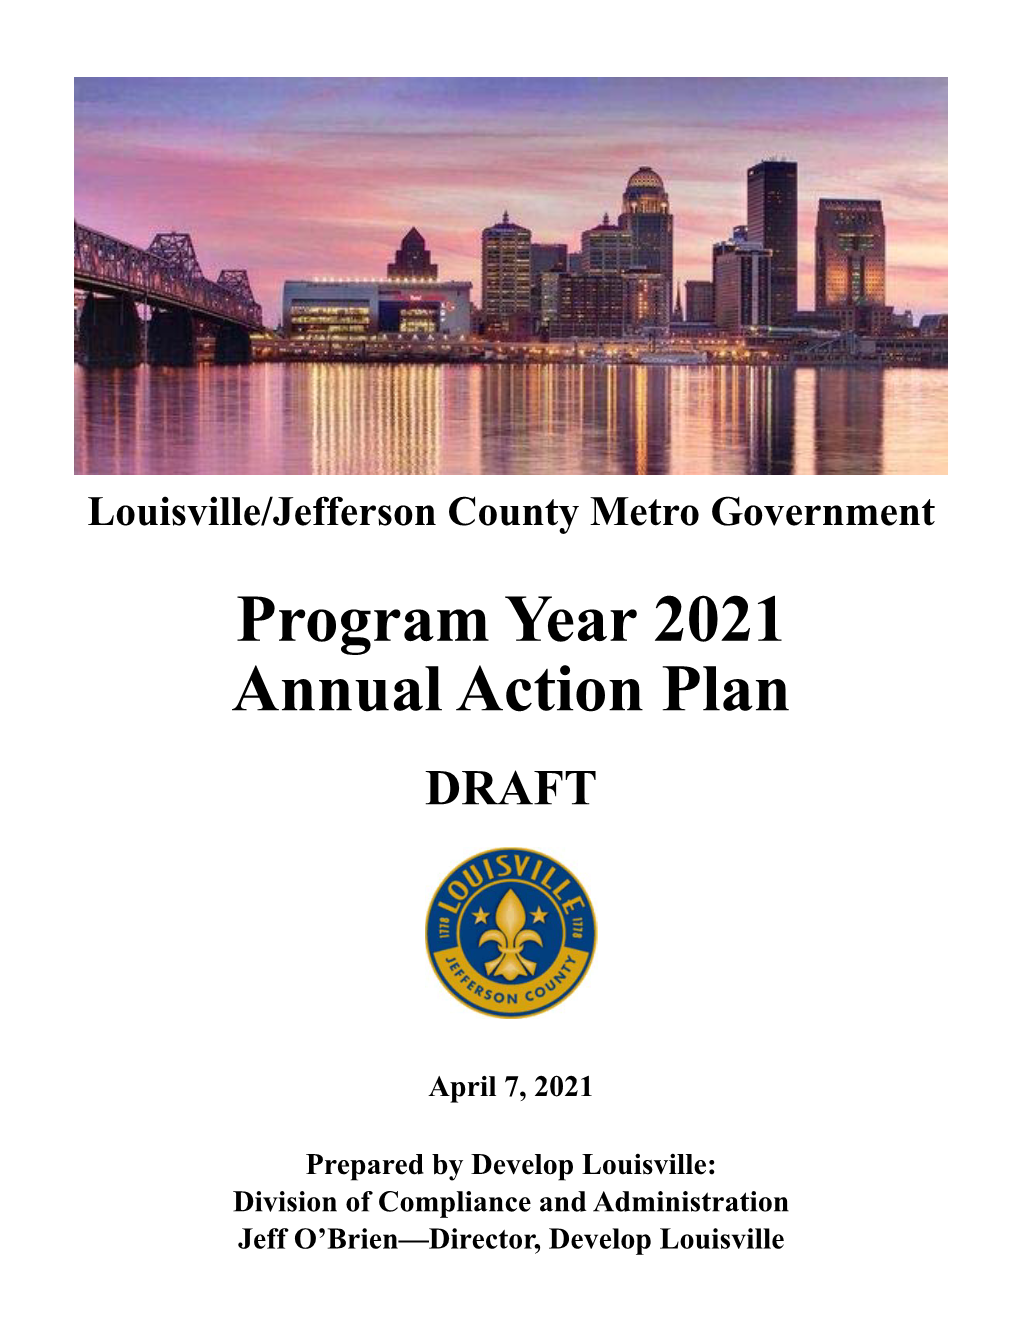 Program Year 2021 Annual Action Plan DRAFT